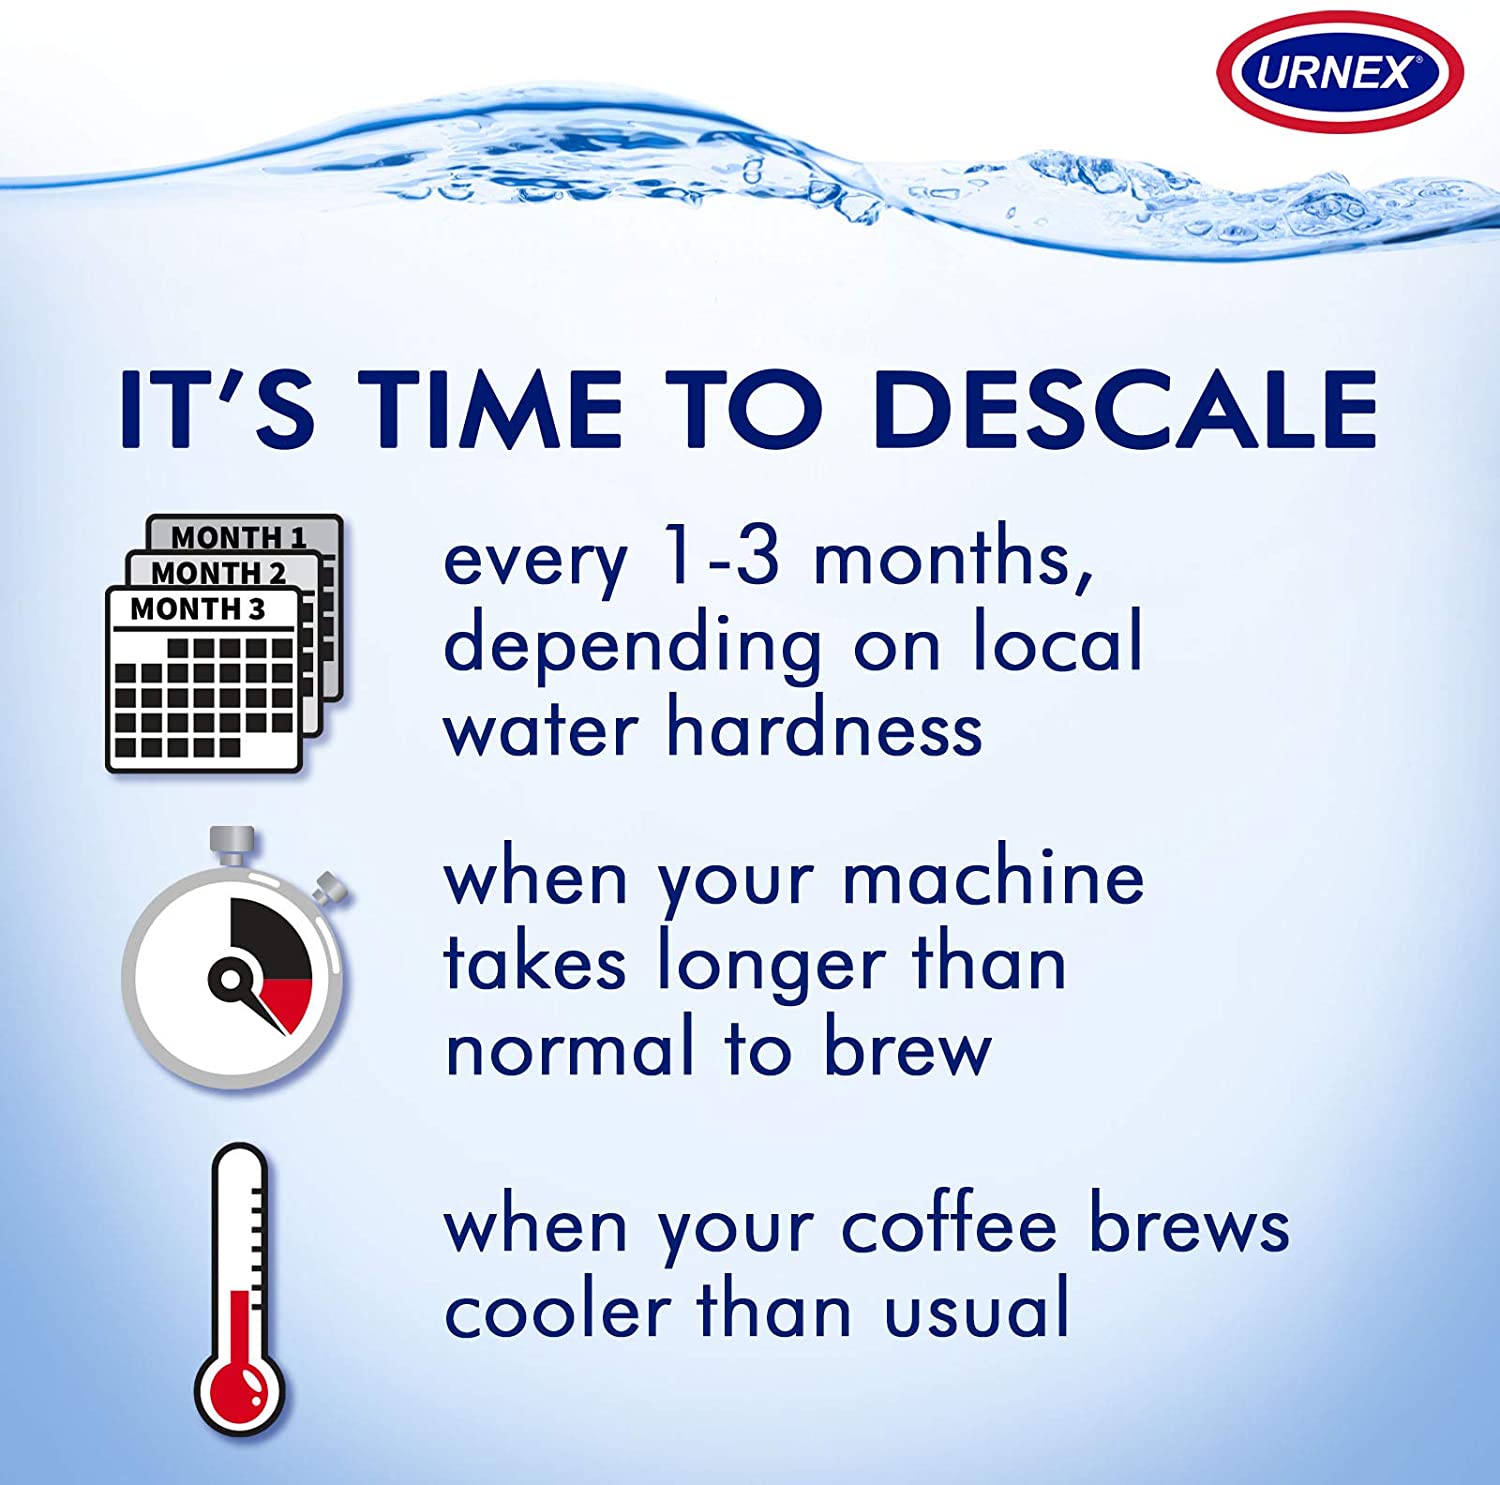 Dezcal Descaler for Espresso Machine [28g]